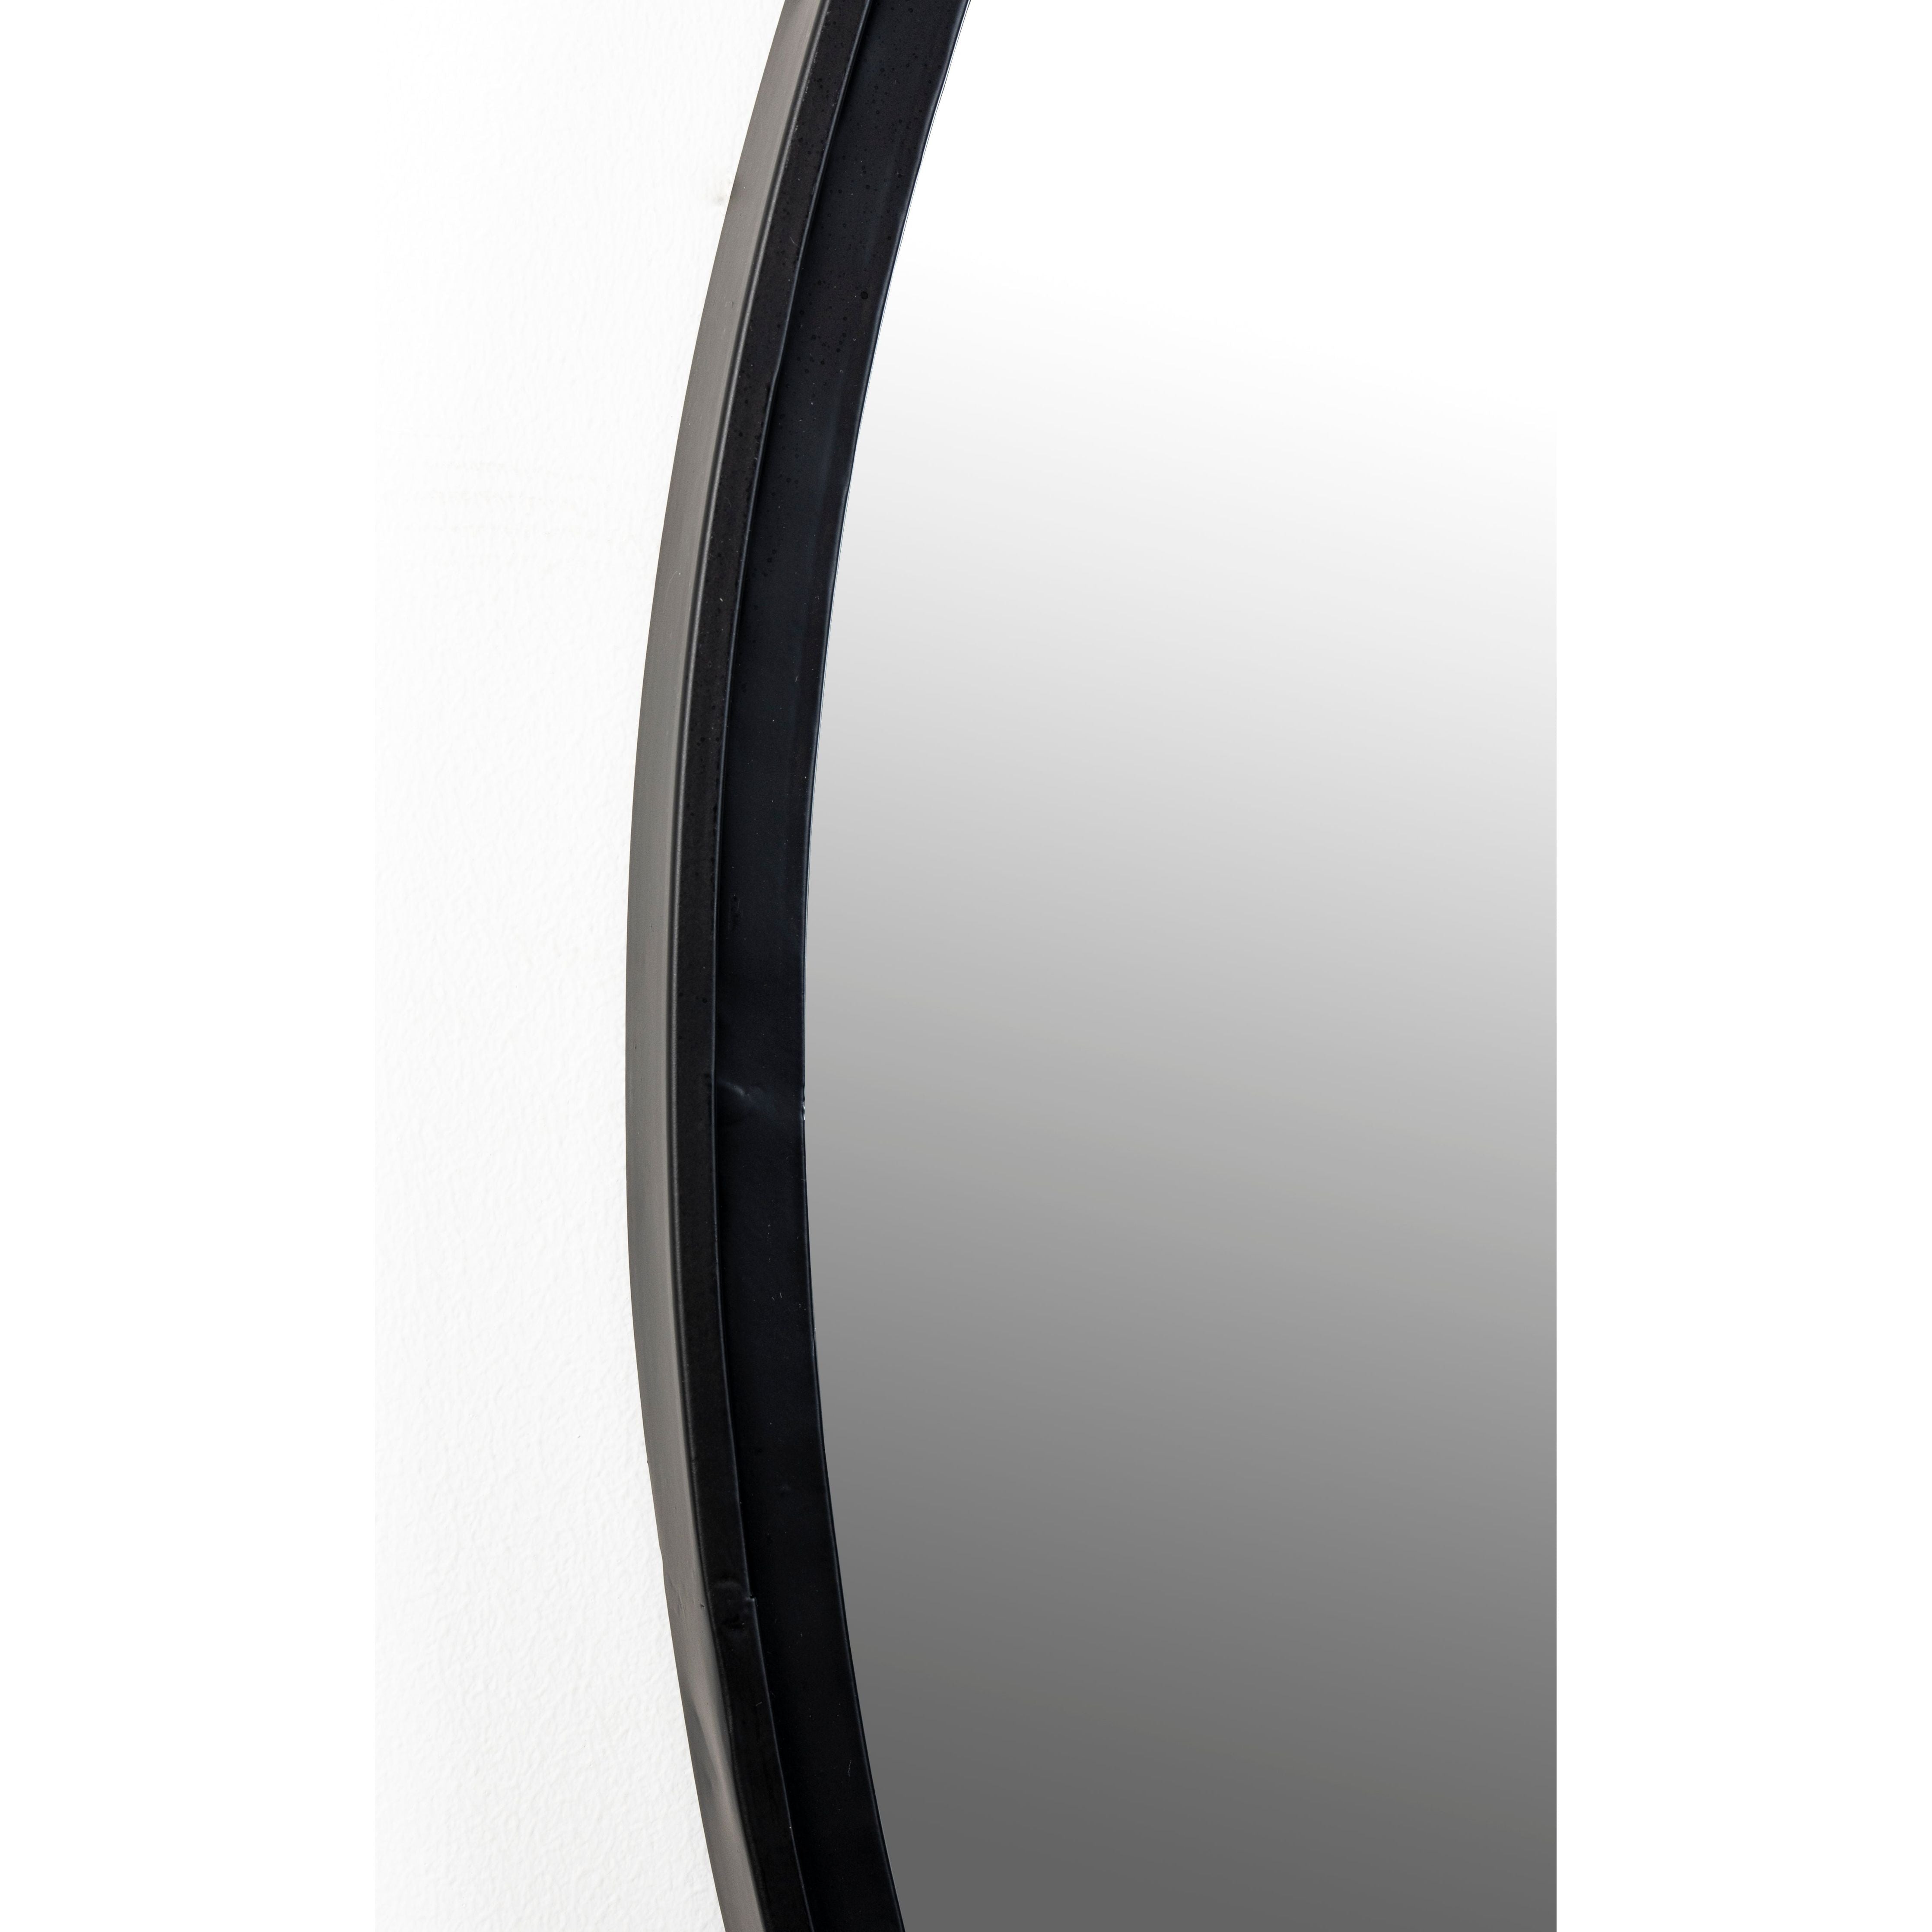 Mirror matz oval m black